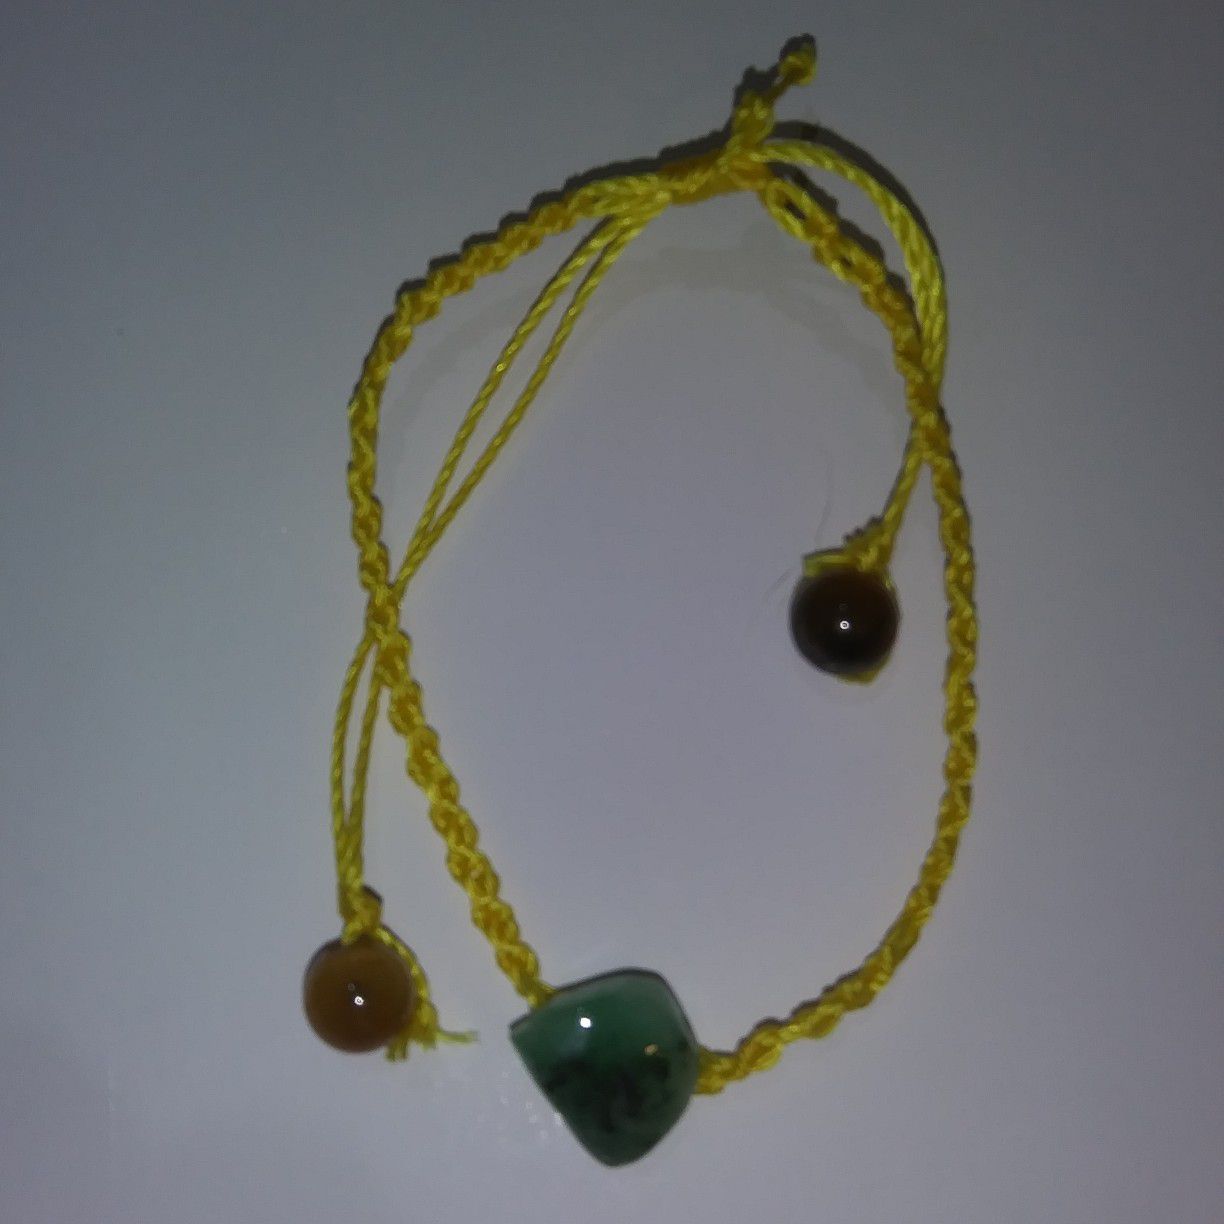 Emerald bracelet with tigereye